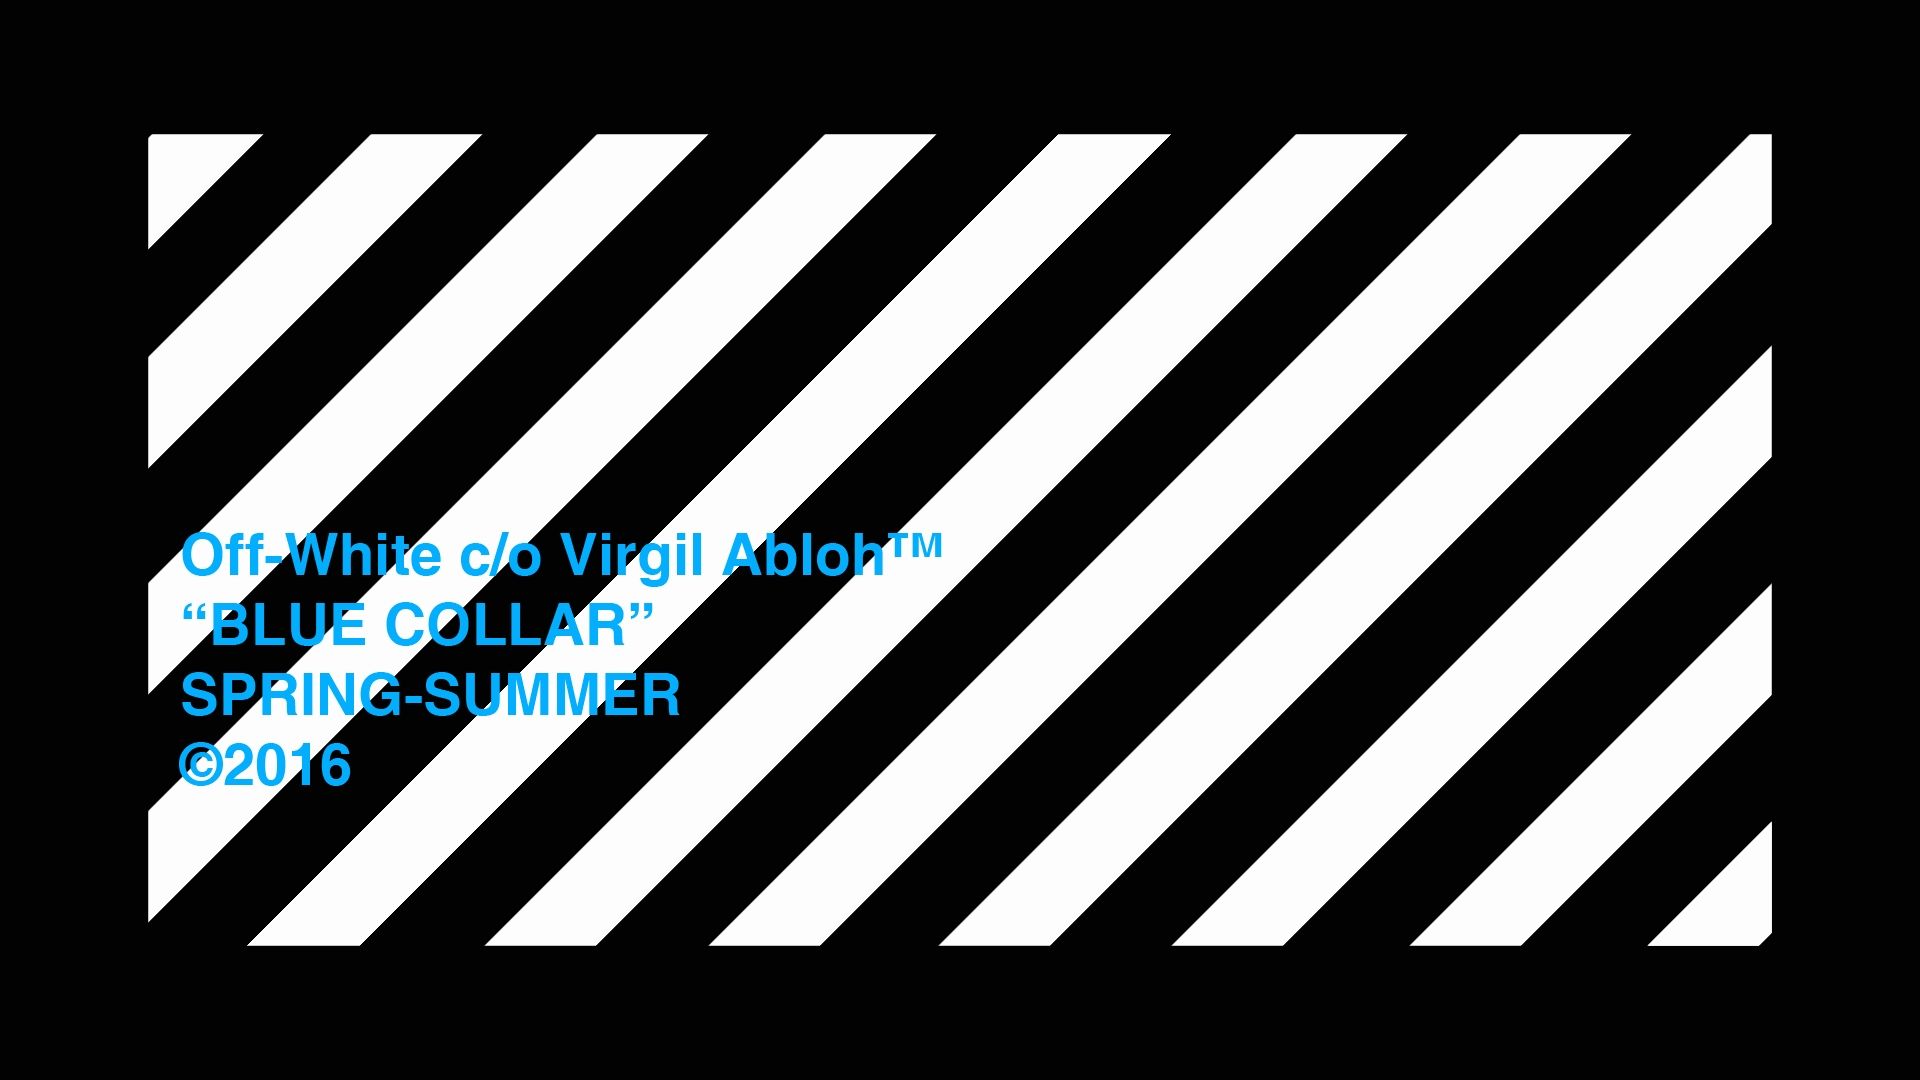 Virgil abloh x Nike wallpaper  Nike wallpaper, Off white